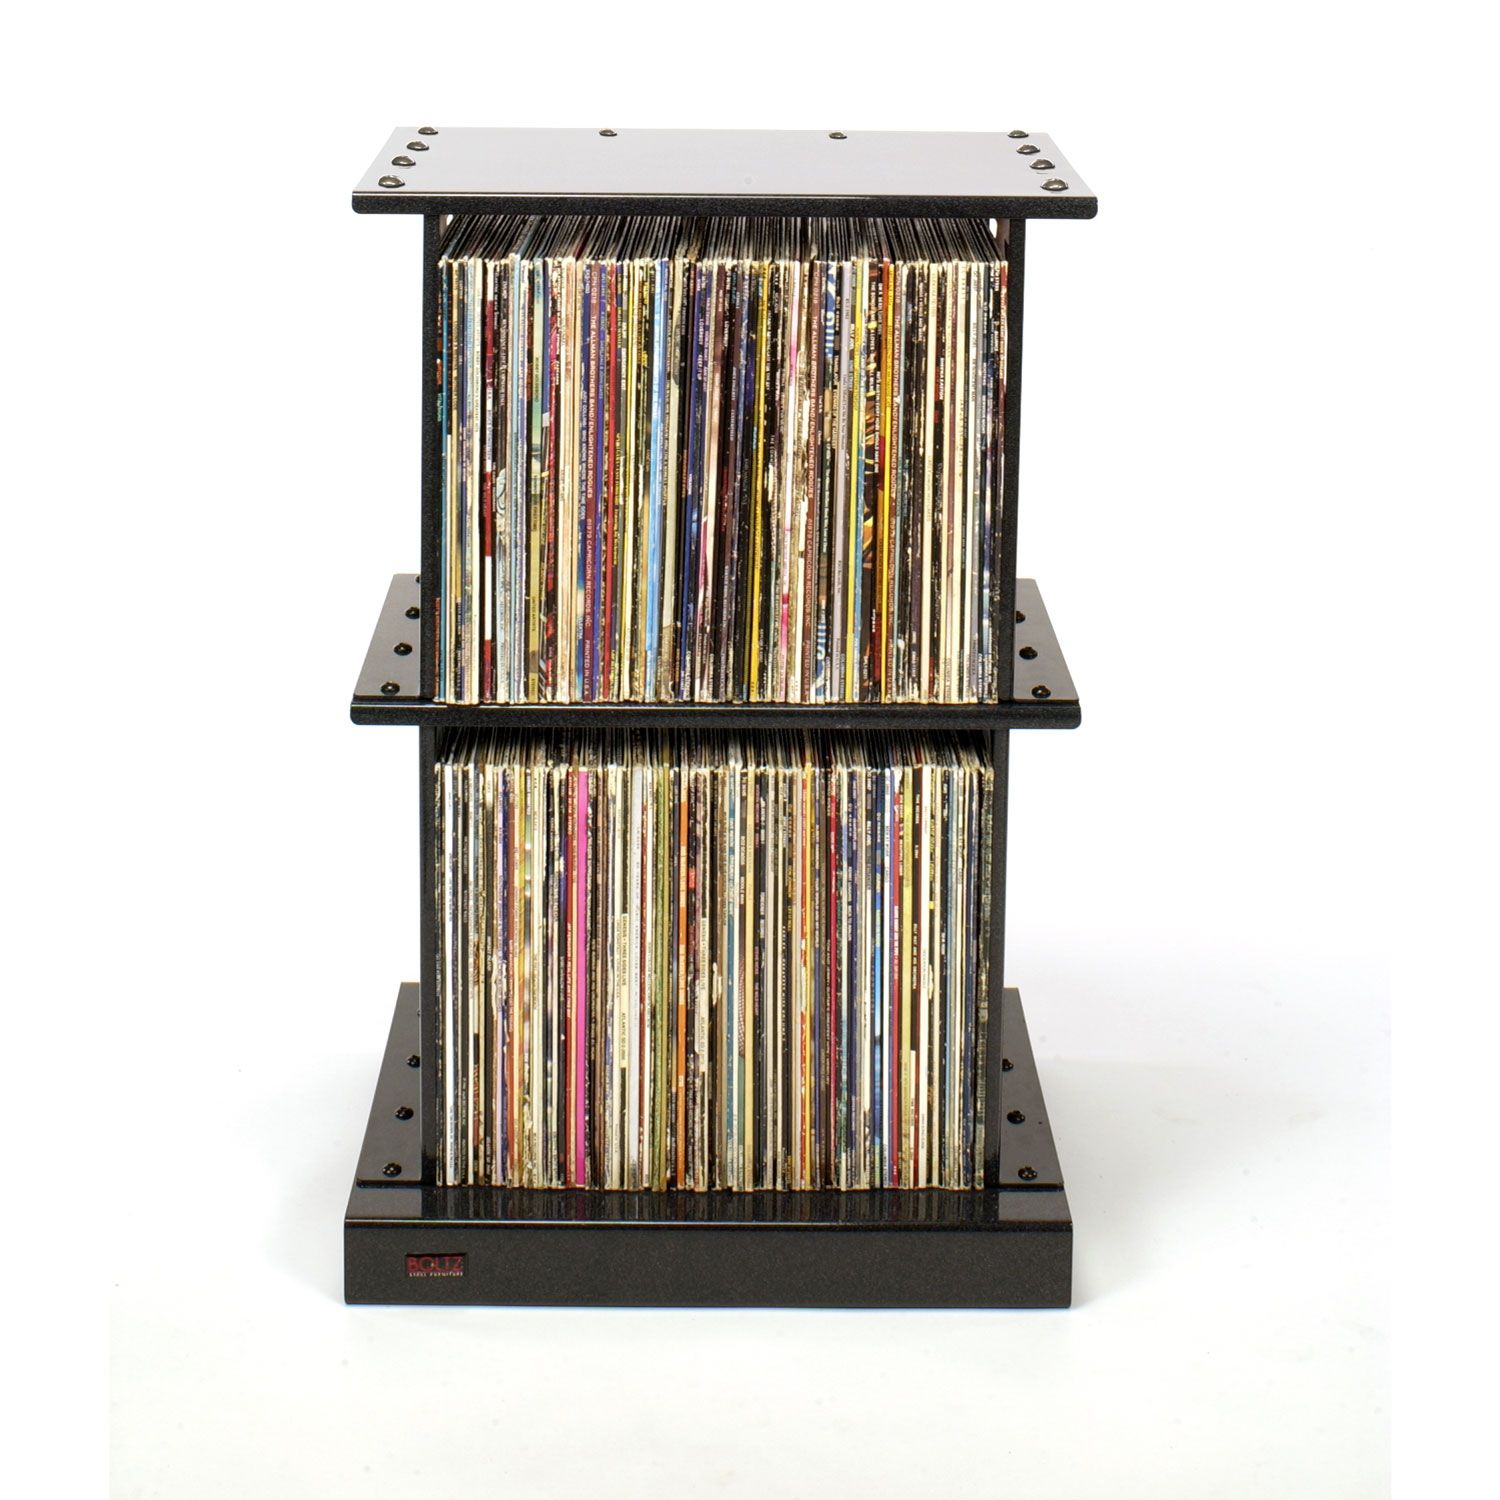 2 Shelf Lp Album Storage Rack Audio, Record Album Shelves